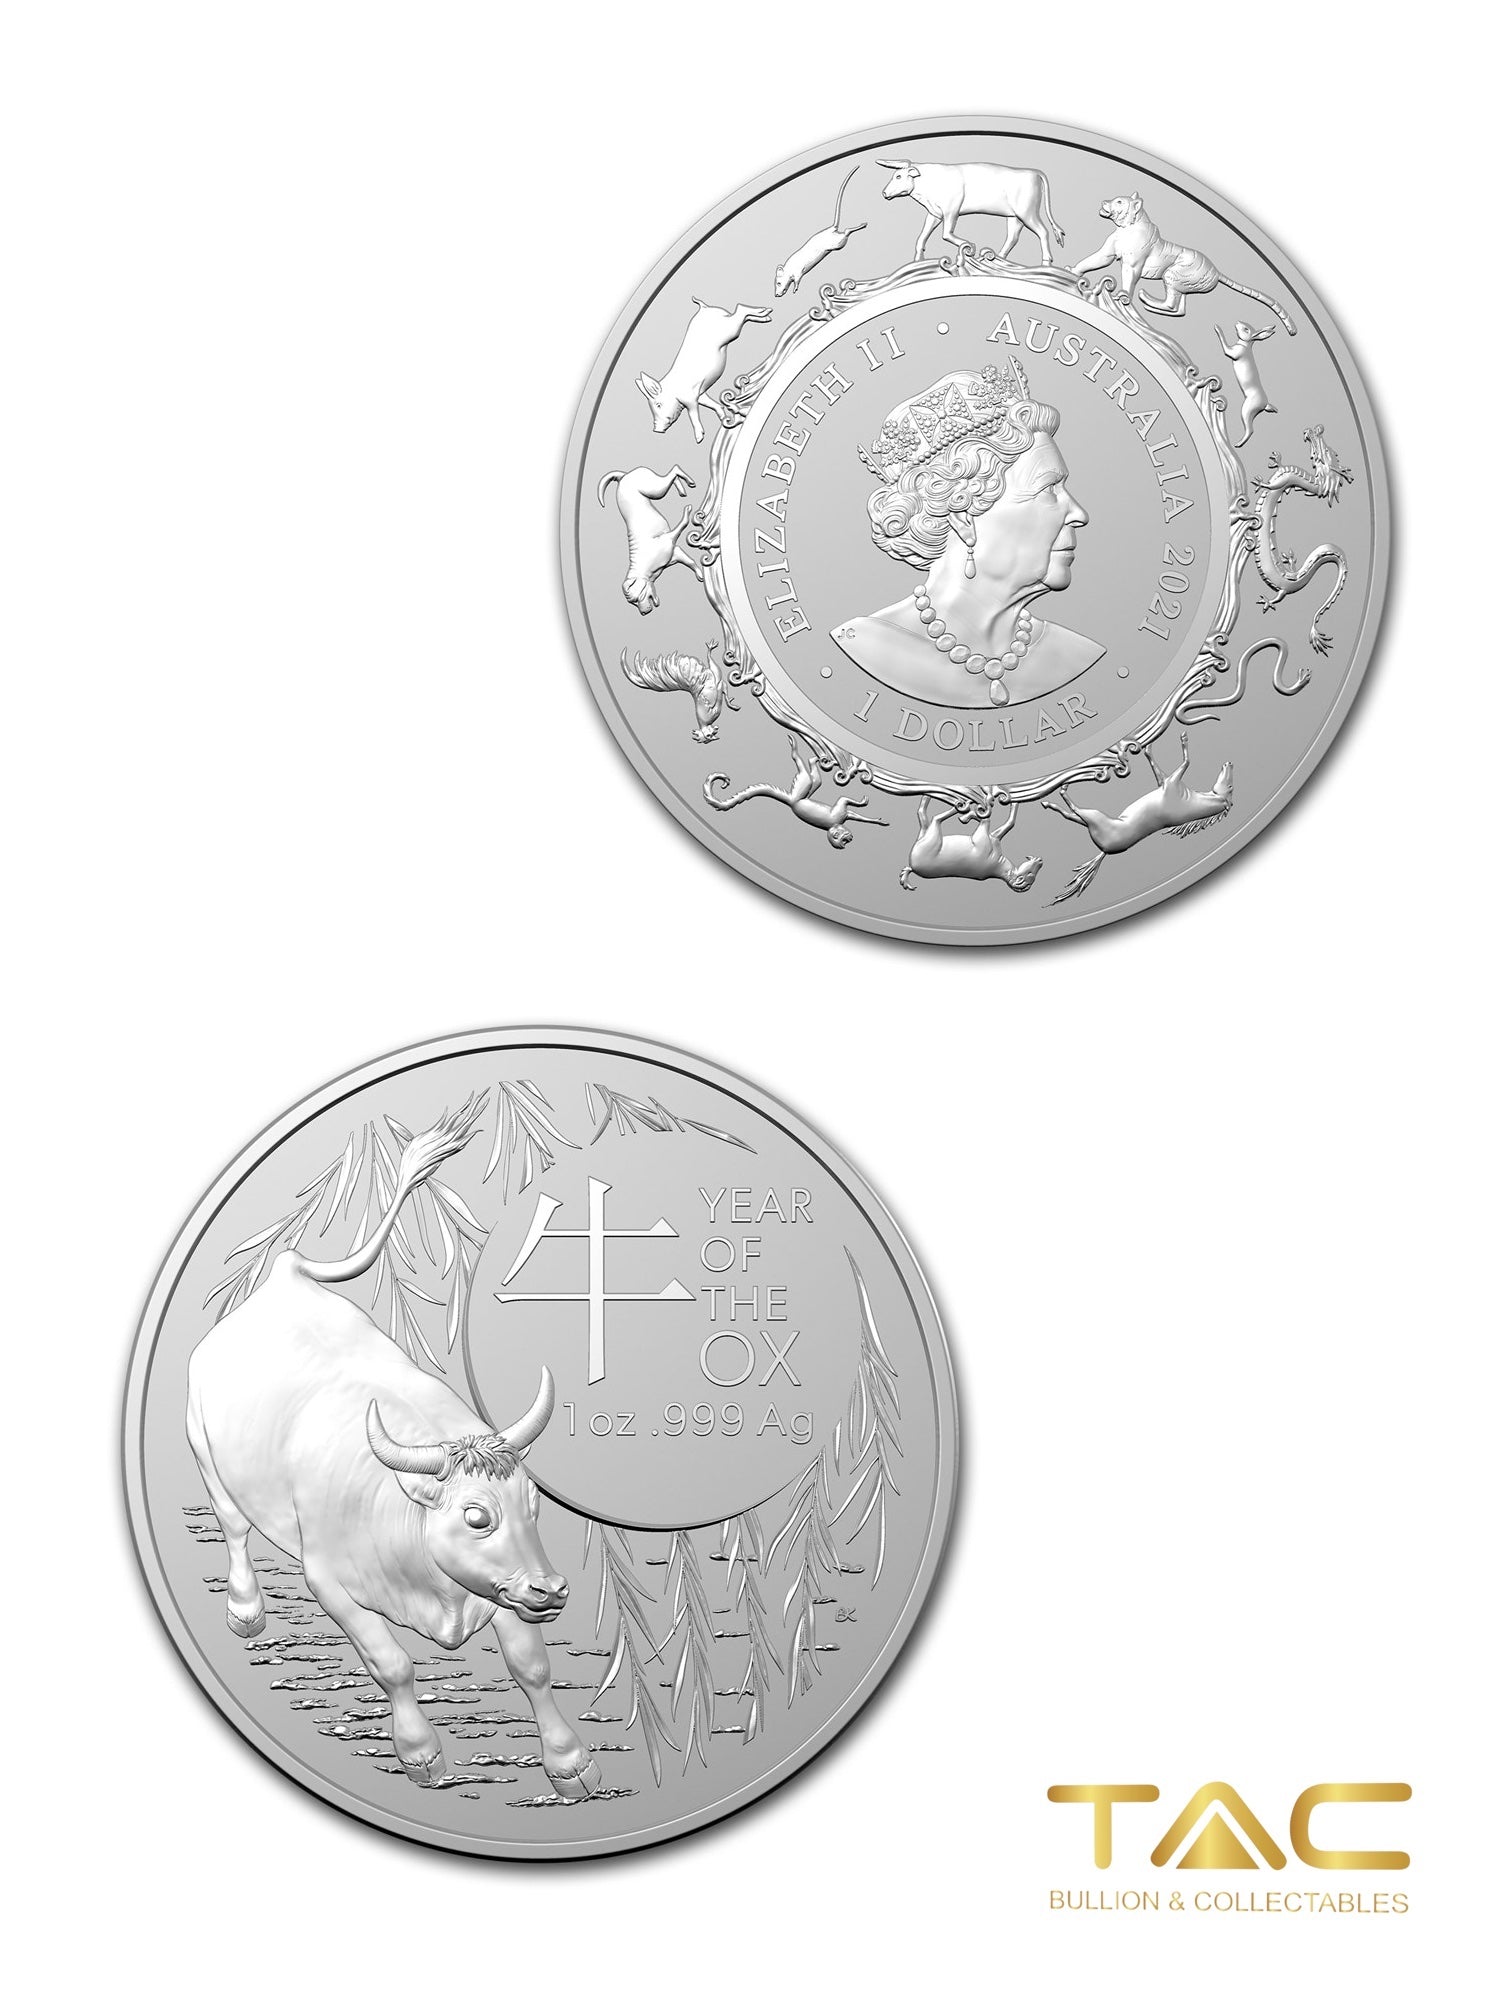 1 oz Silver Coin - 2021 Lunar Year of the Ox - Royal Australian Mint